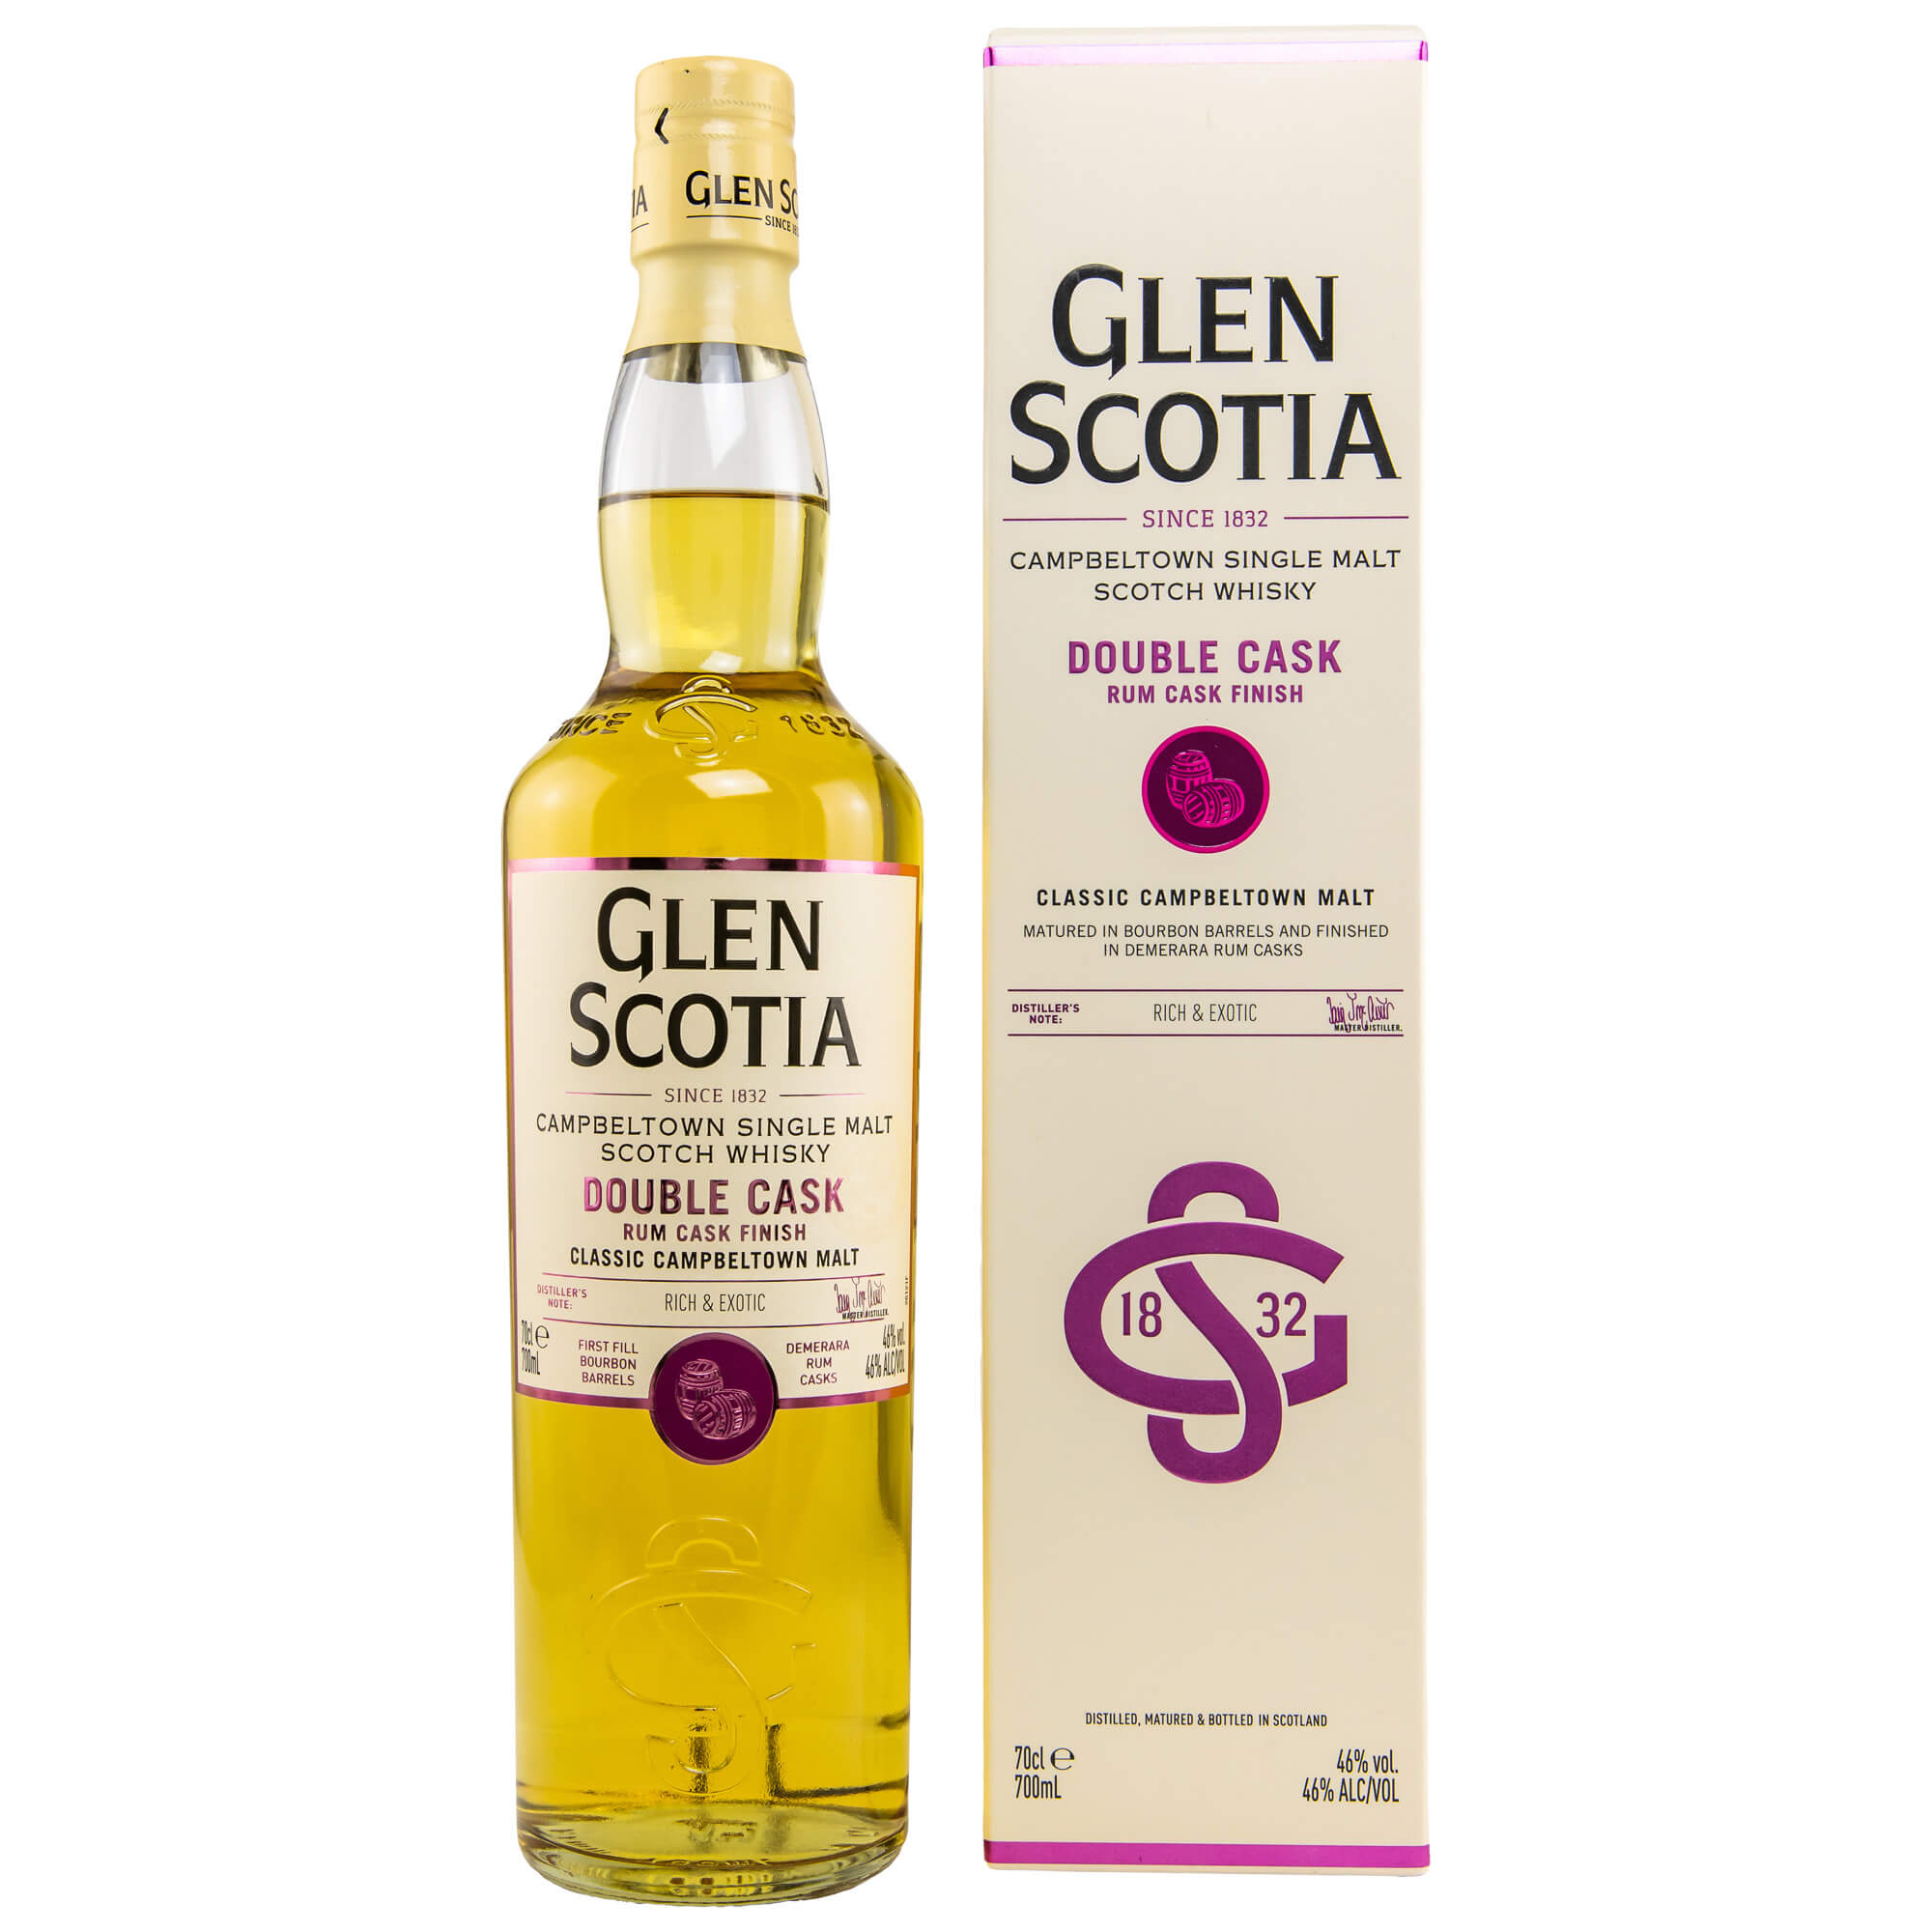 Glen Scotia Double Cask Rum Finish Campbeltown Single Malt Scotch Whisky